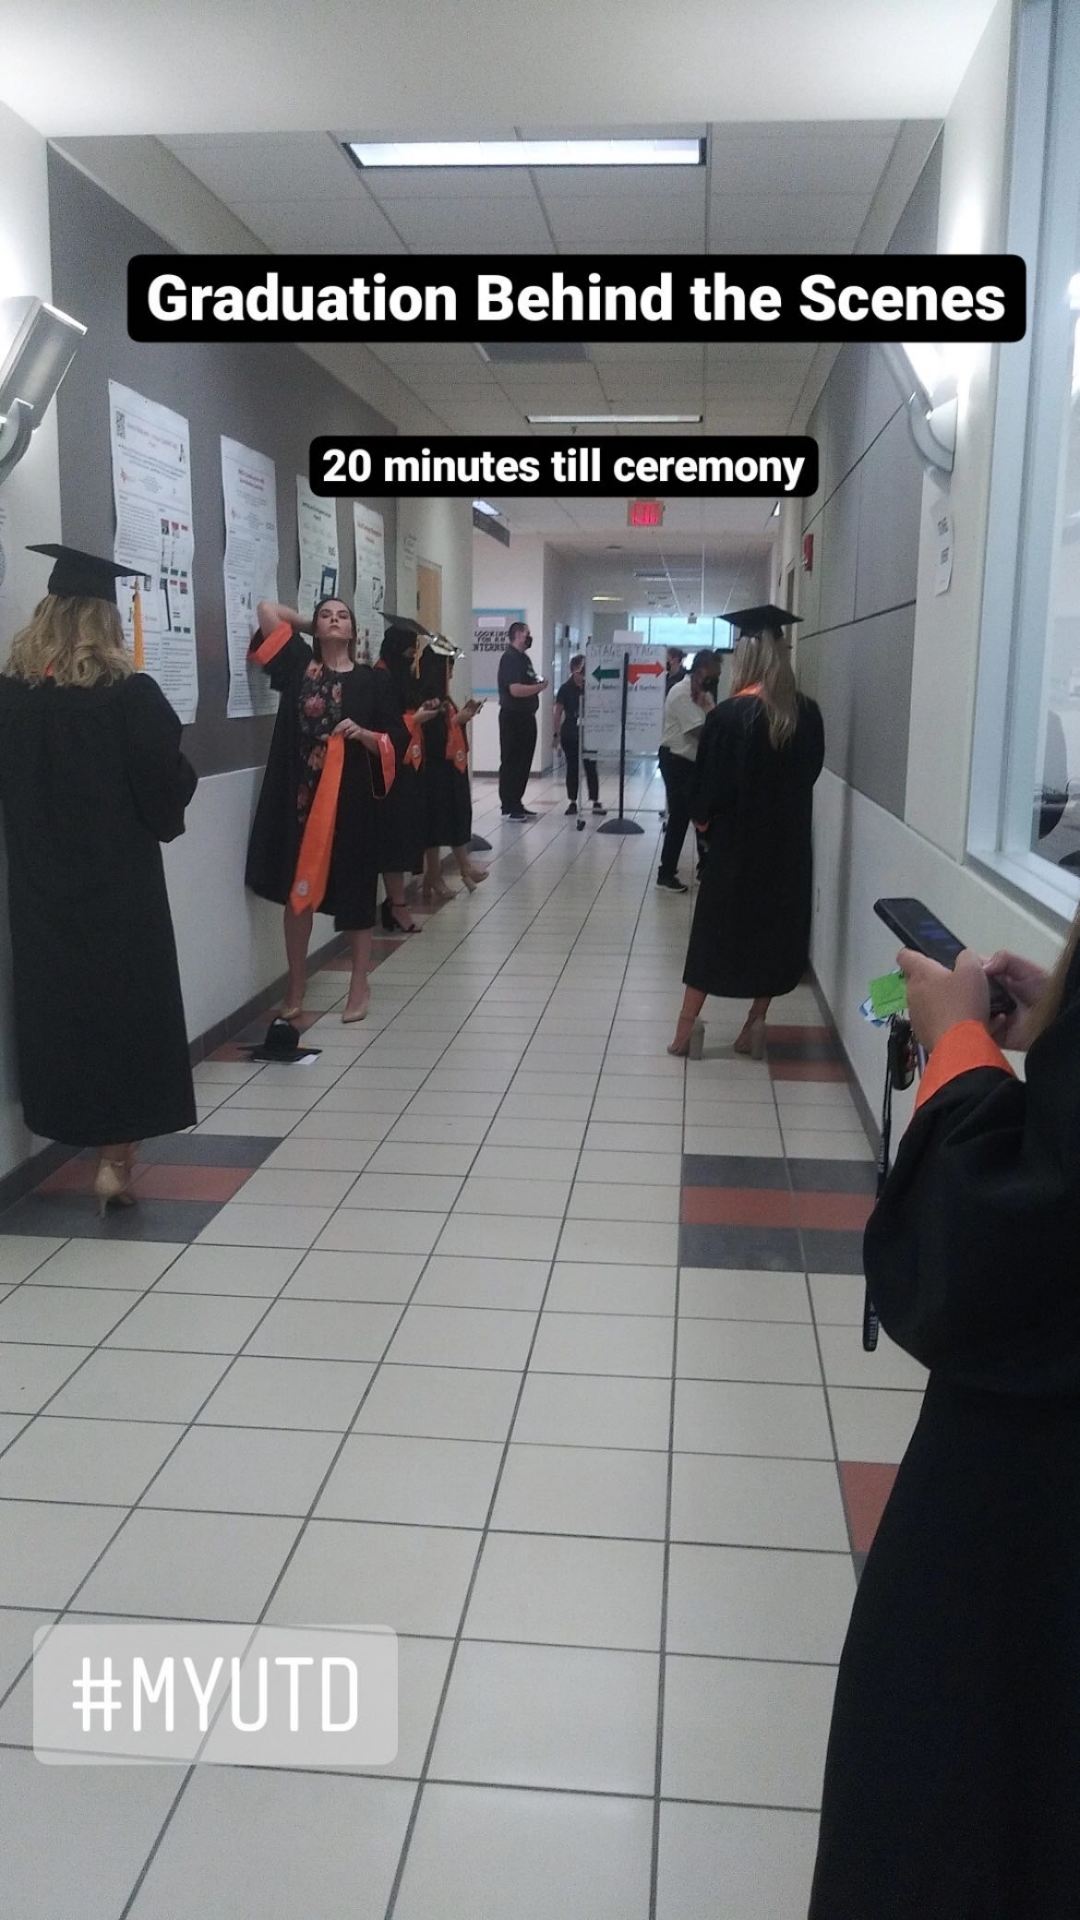 Graduation behind the scenes. Graduates in regalia line the hallway of the activity center.